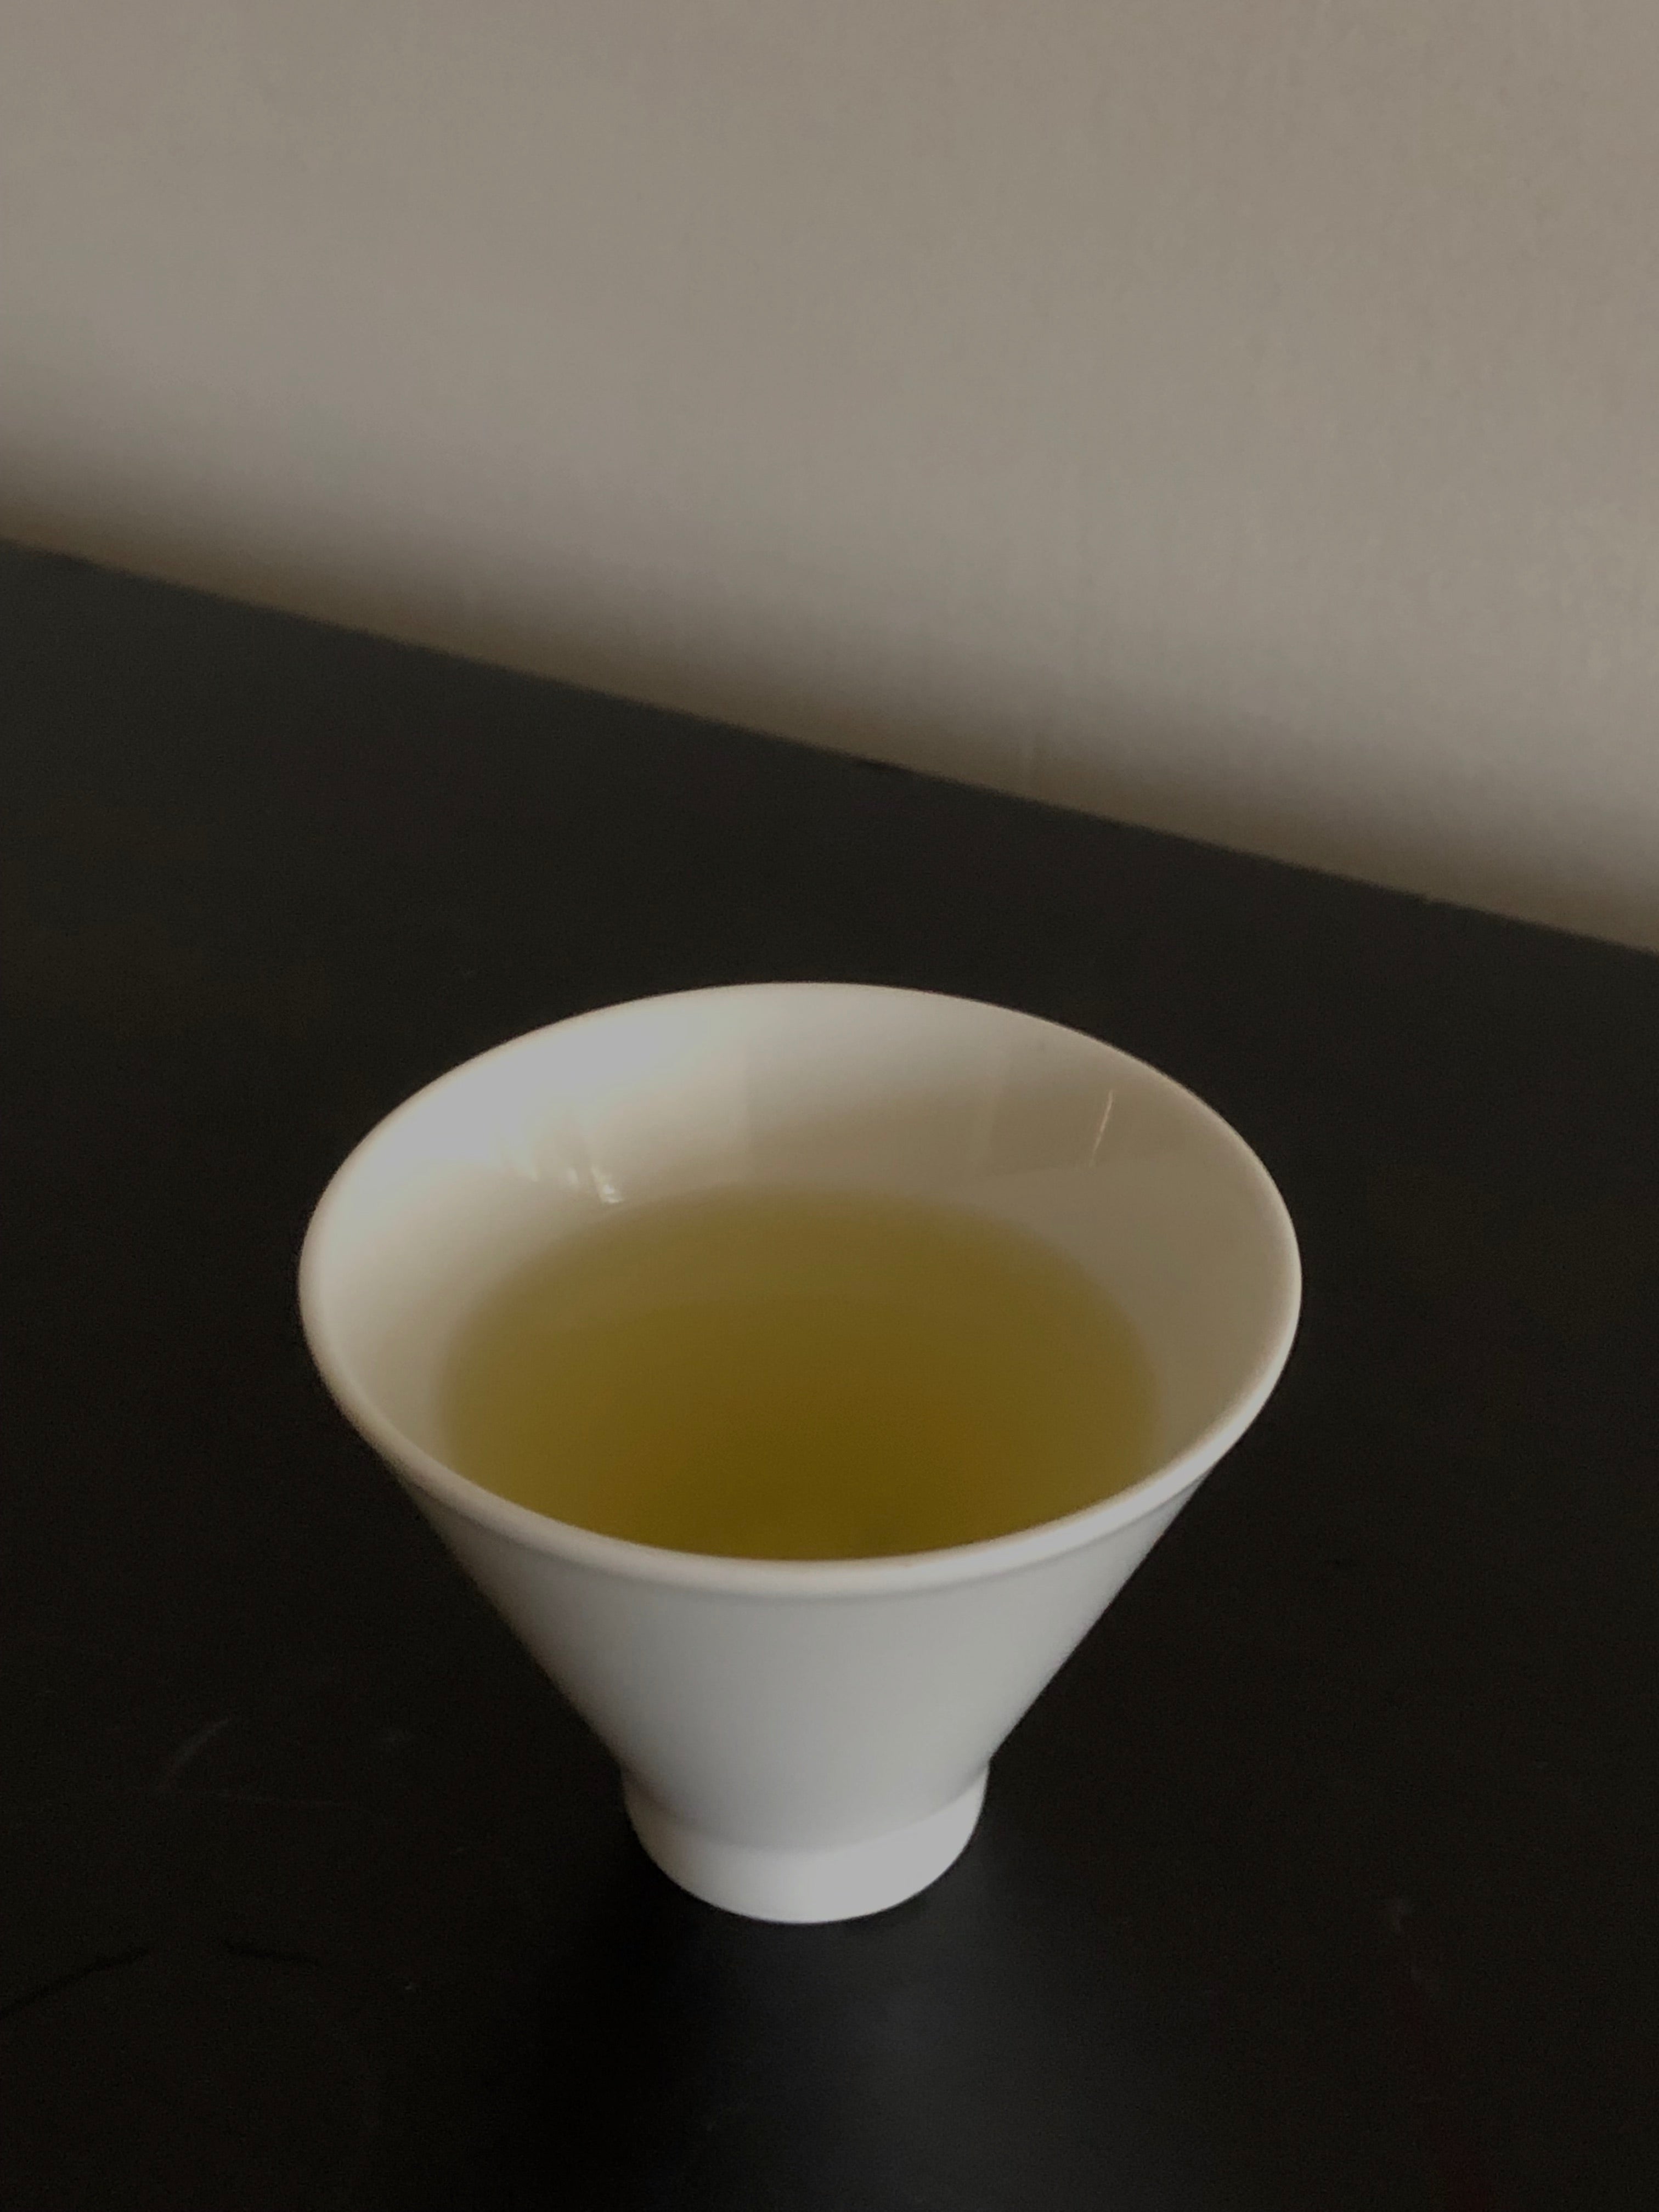 Shiraore karigane green tea loose leaf brew side view from Yame Fukuoka sold by Sabo Tea Australia - Chiyonoen